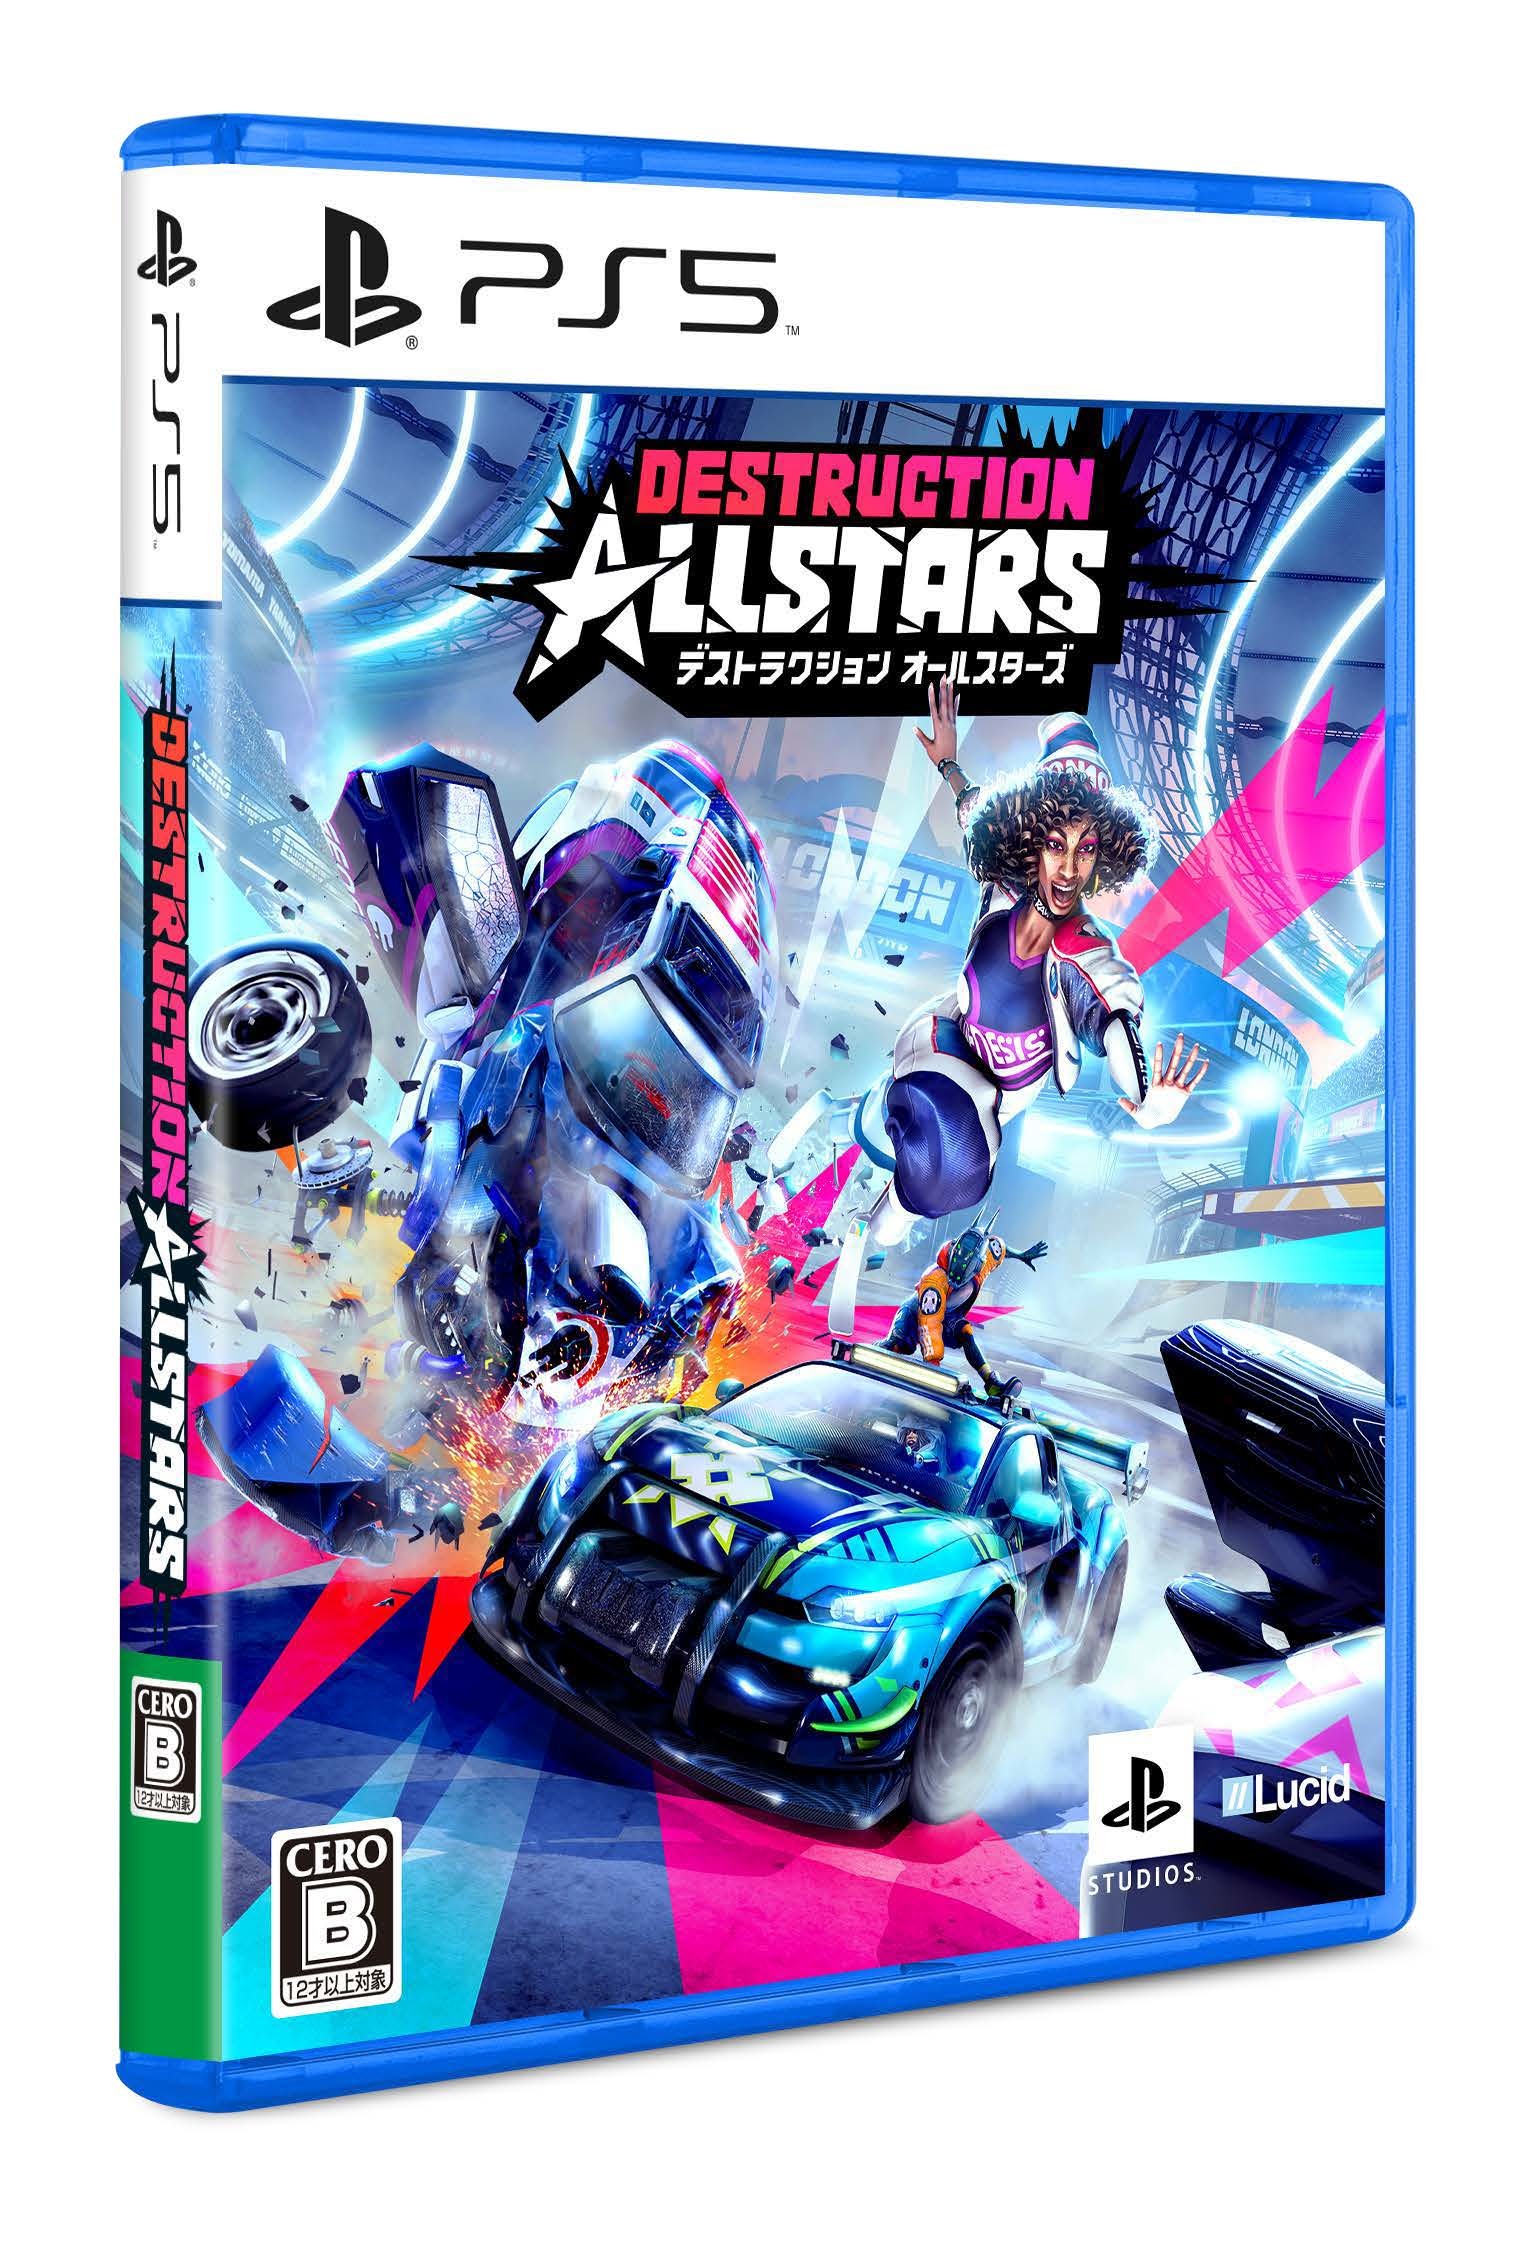  『Destruction AllStars』パッケージ (C)Sony Interactive Entertainment Europe Ltd. Developed by Lucid Games Limited.